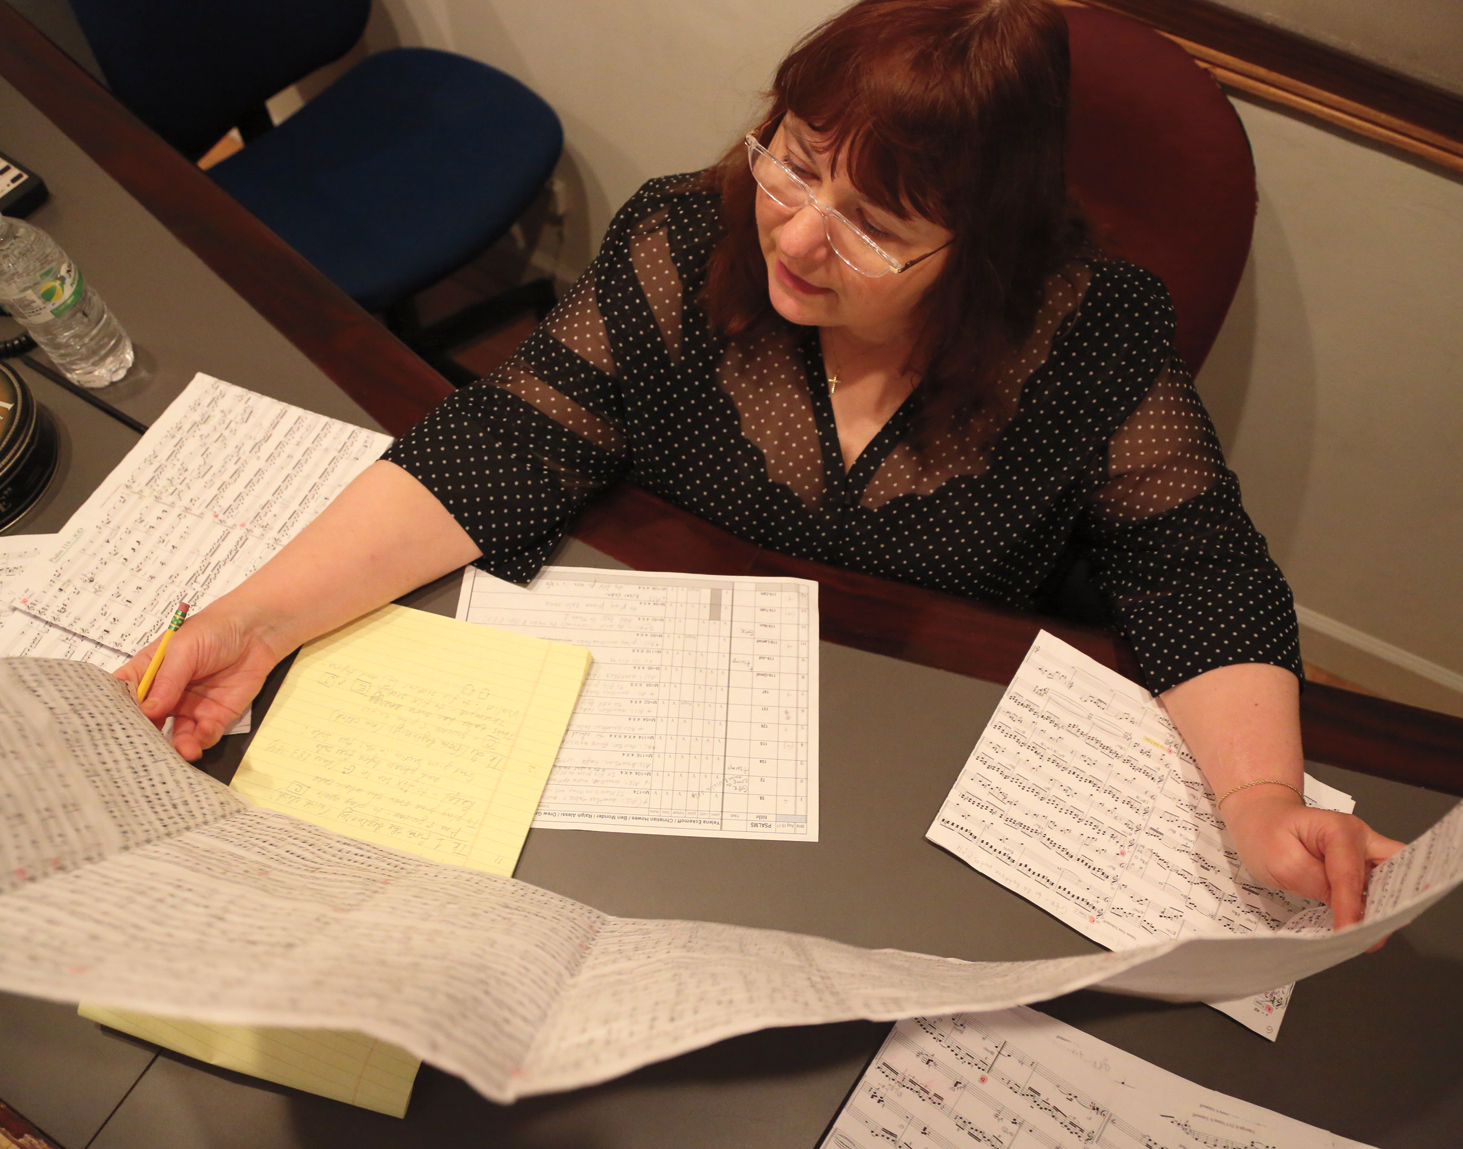 Pianist/composer Yelena Eckemoff at work in the recording studio.